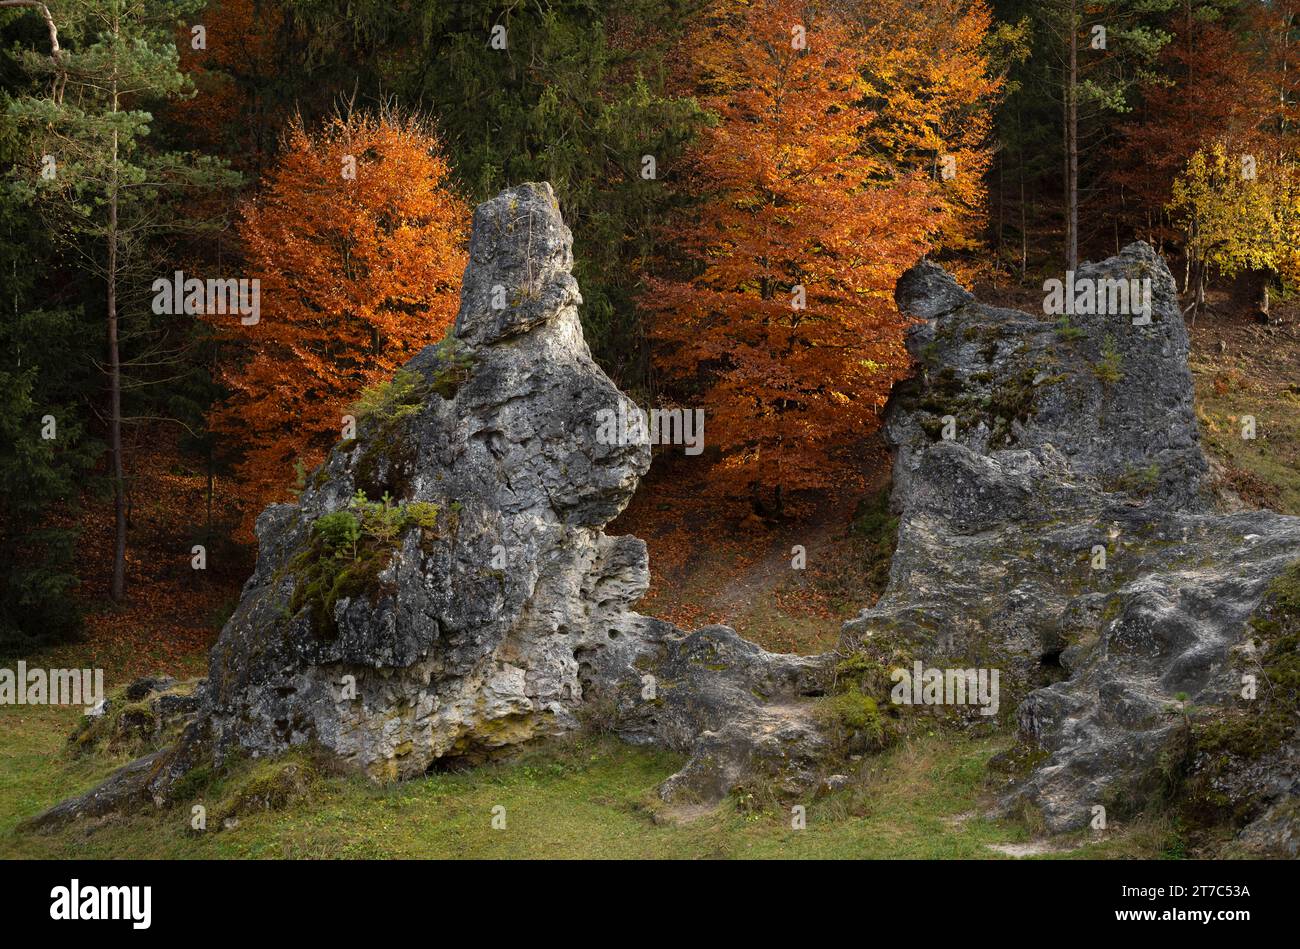 Dolomitfelsen, Meer der Felsen, Wental, Herbstatmosphäre, Herbst, Barholomae, Baden-Württemberg, Deutschland Stockfoto